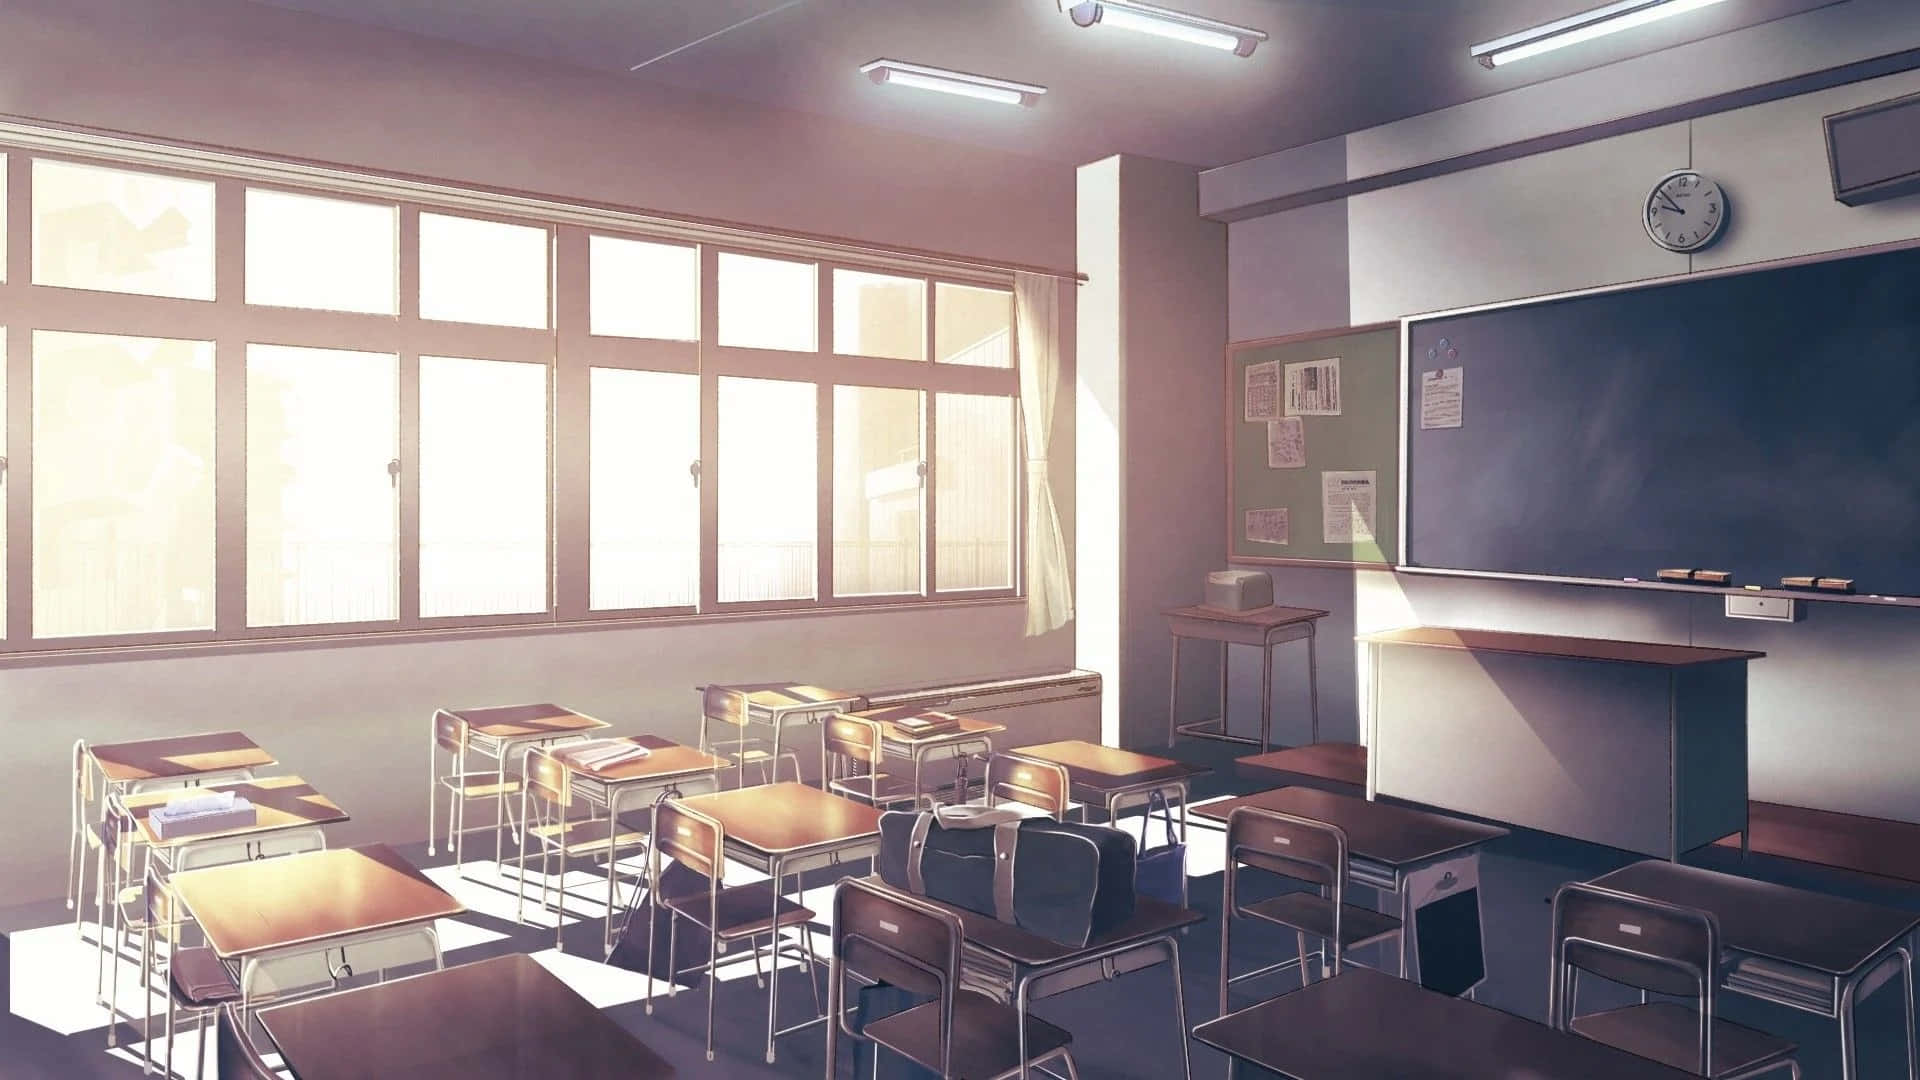 Educational Enlightenment: An Empty Classroom